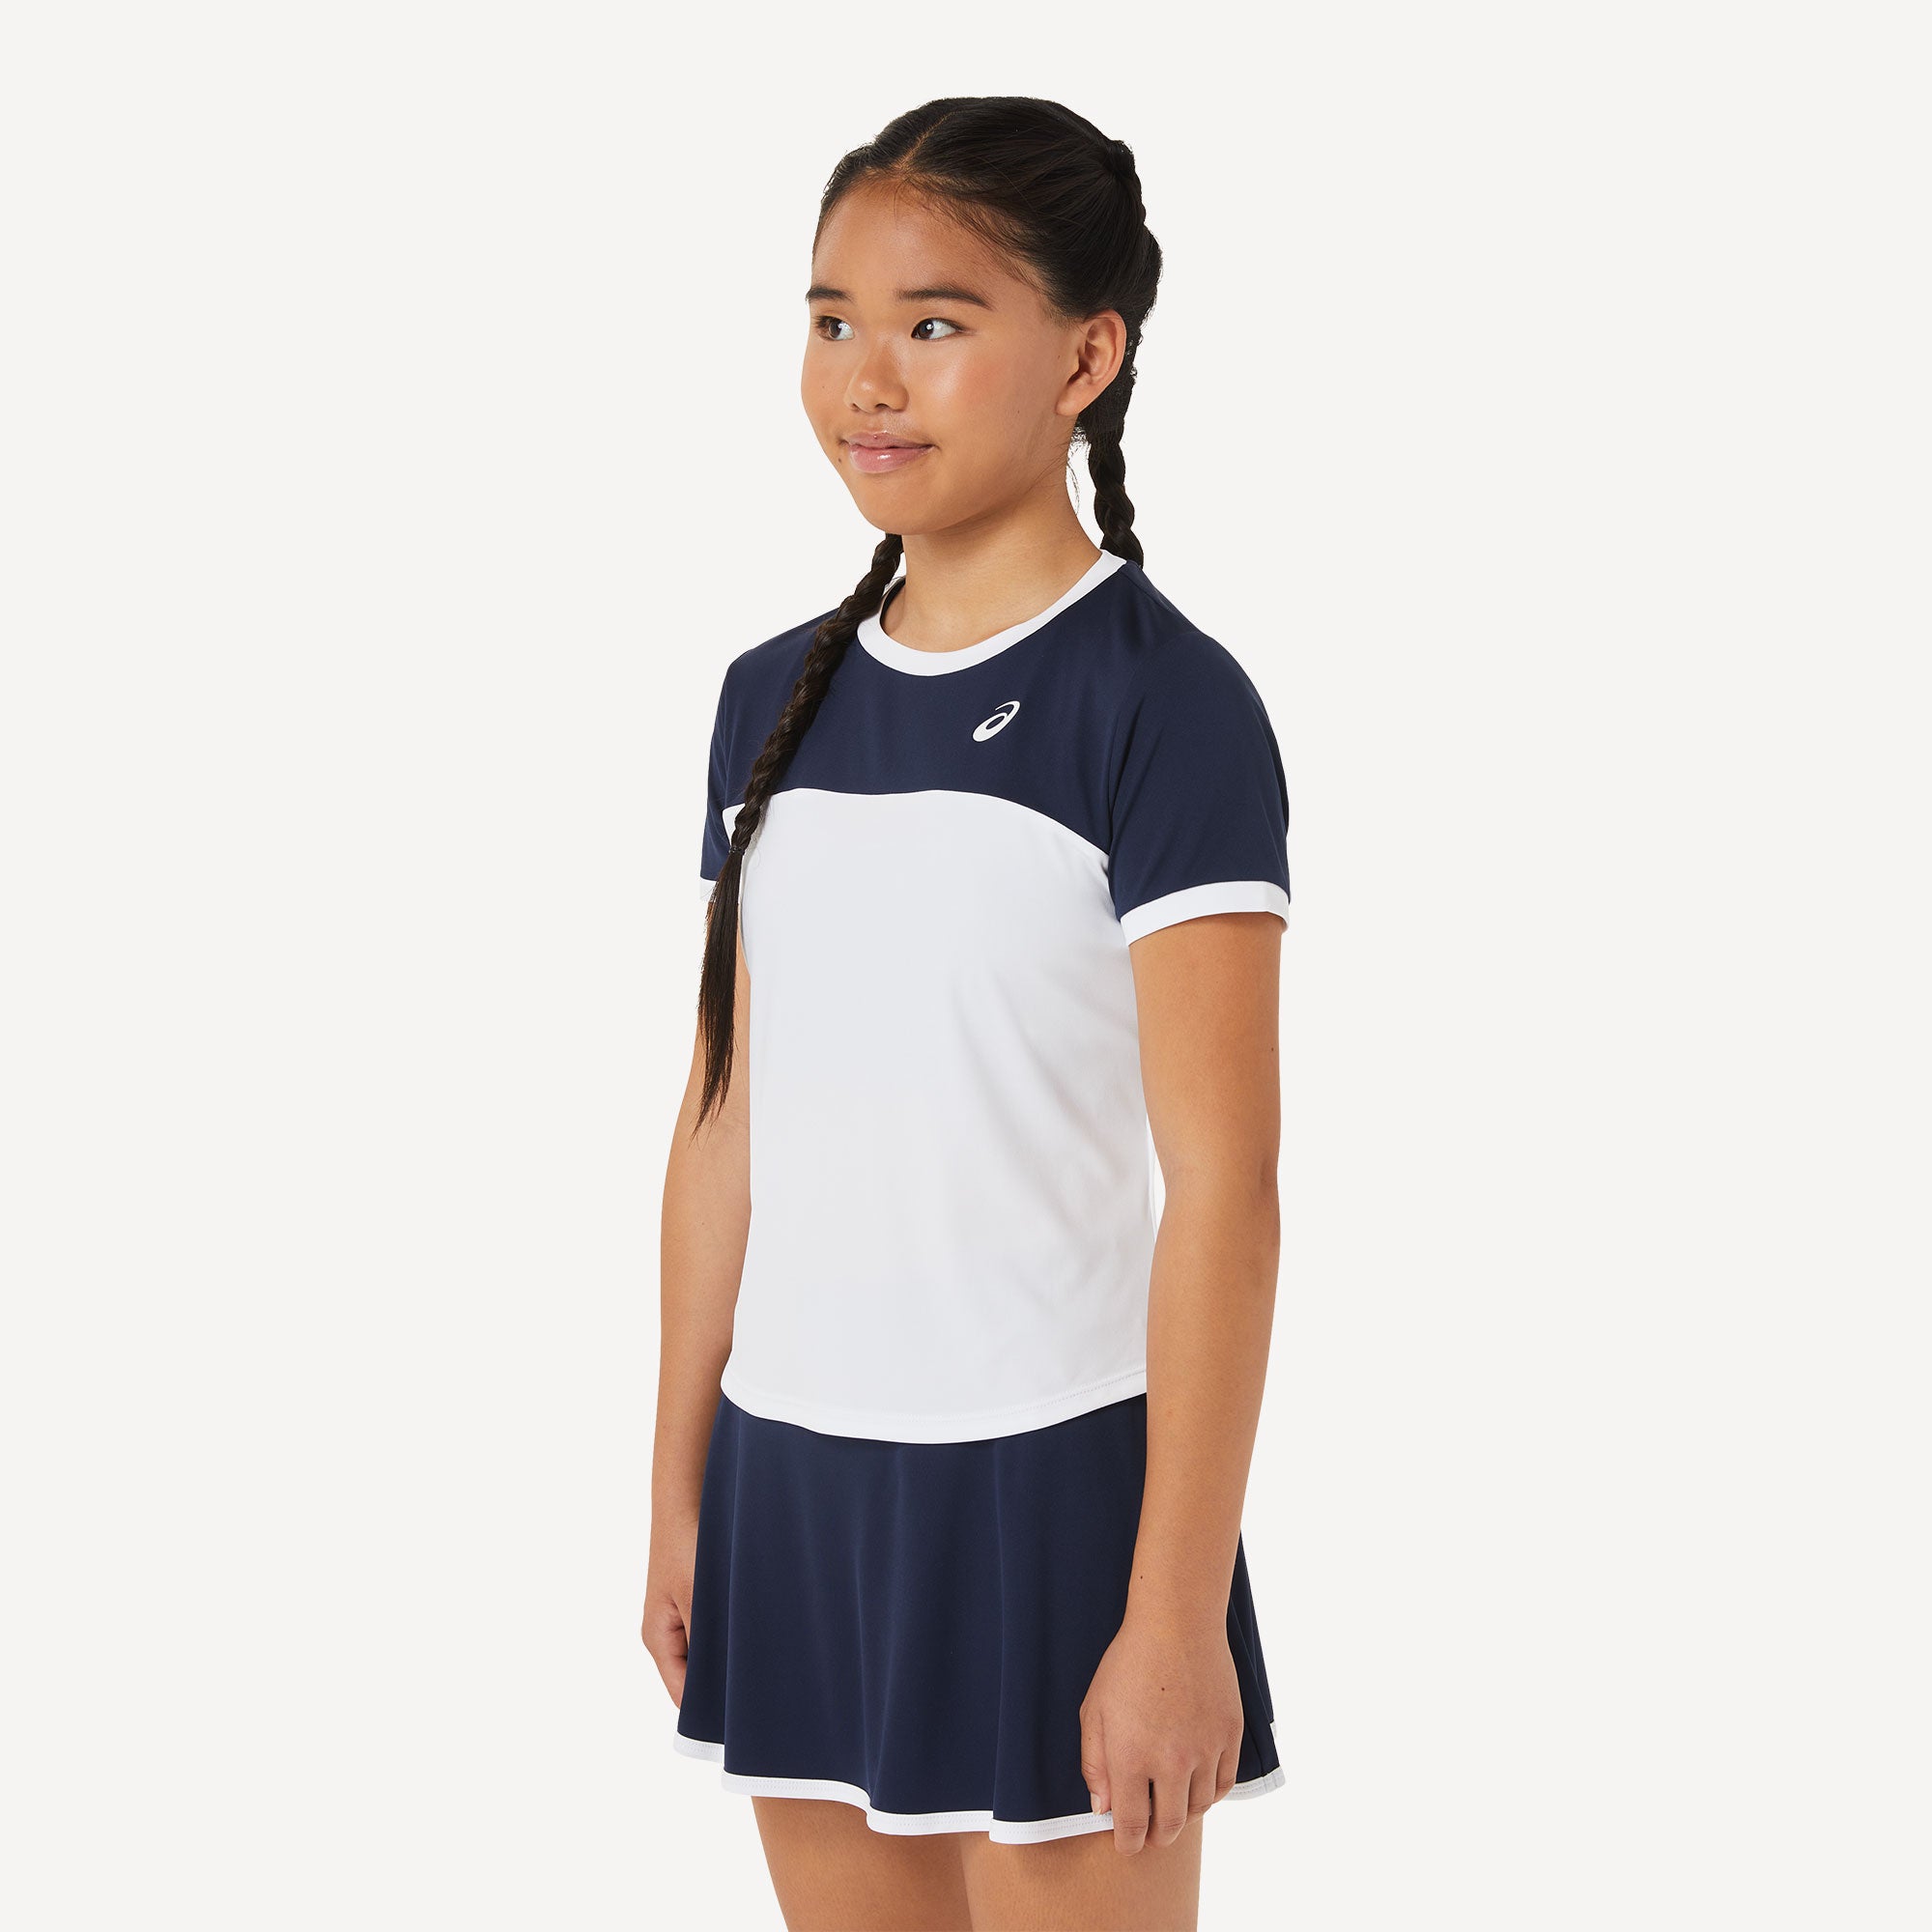 ASICS Girls' Tennis Shirt White (3)